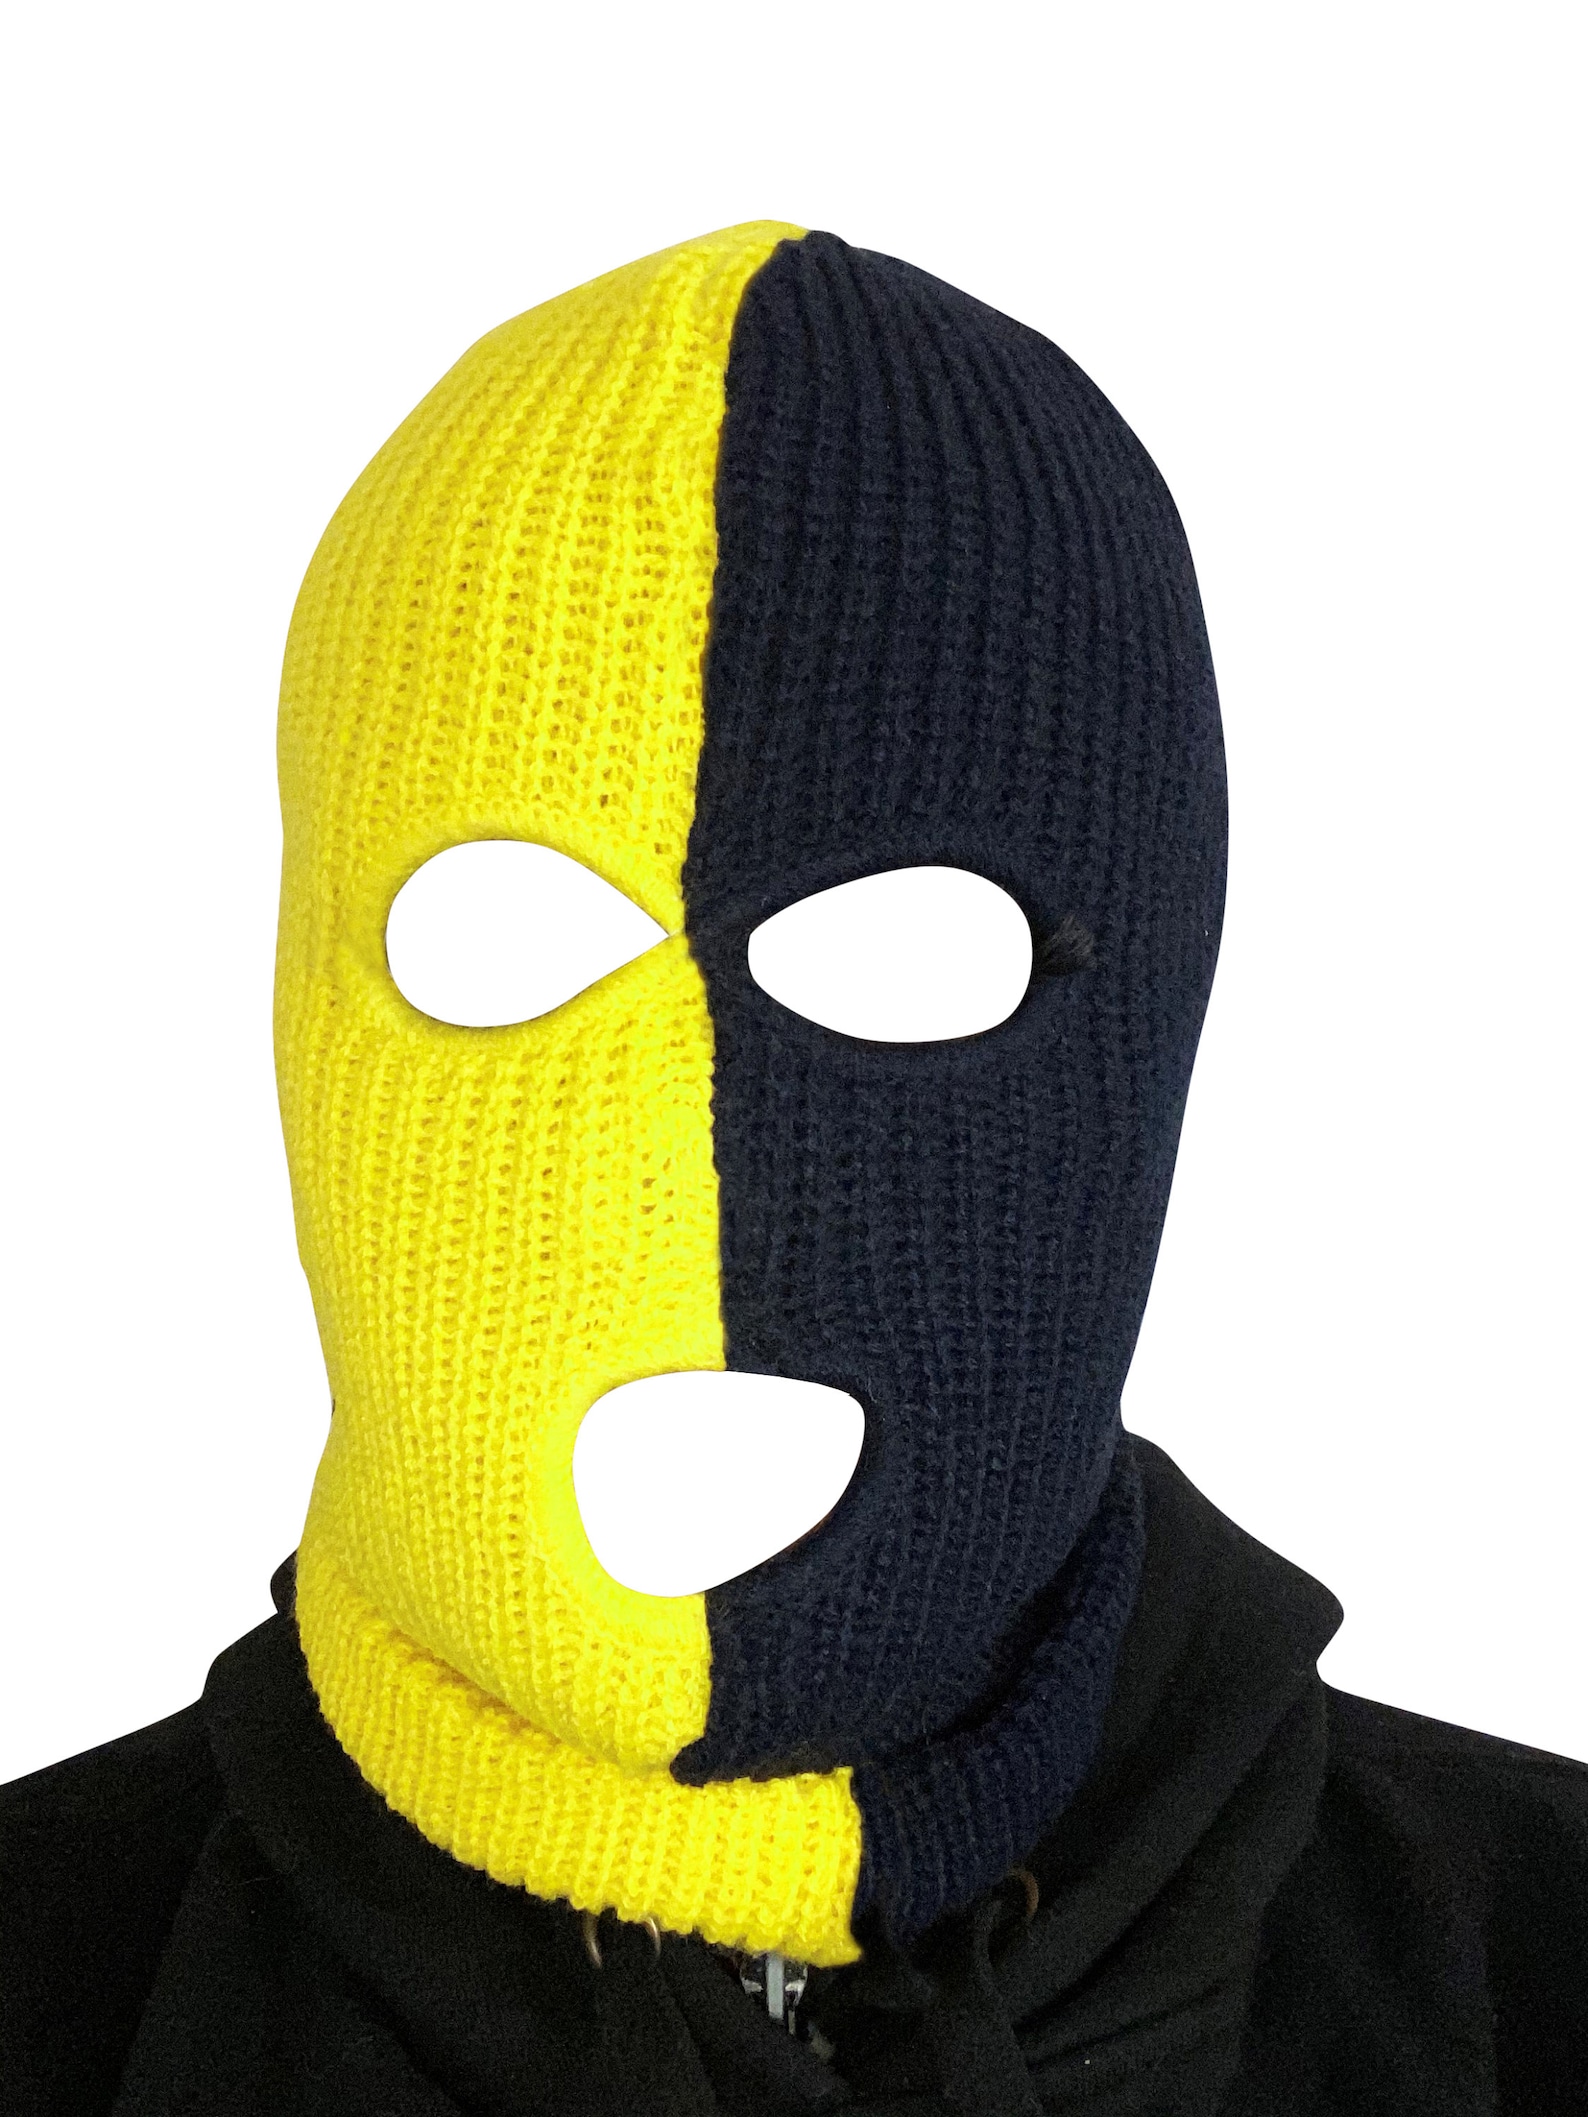 Ski Mask 3 Holes Yellow and Black Air Jordan 12 Colors Two - Etsy